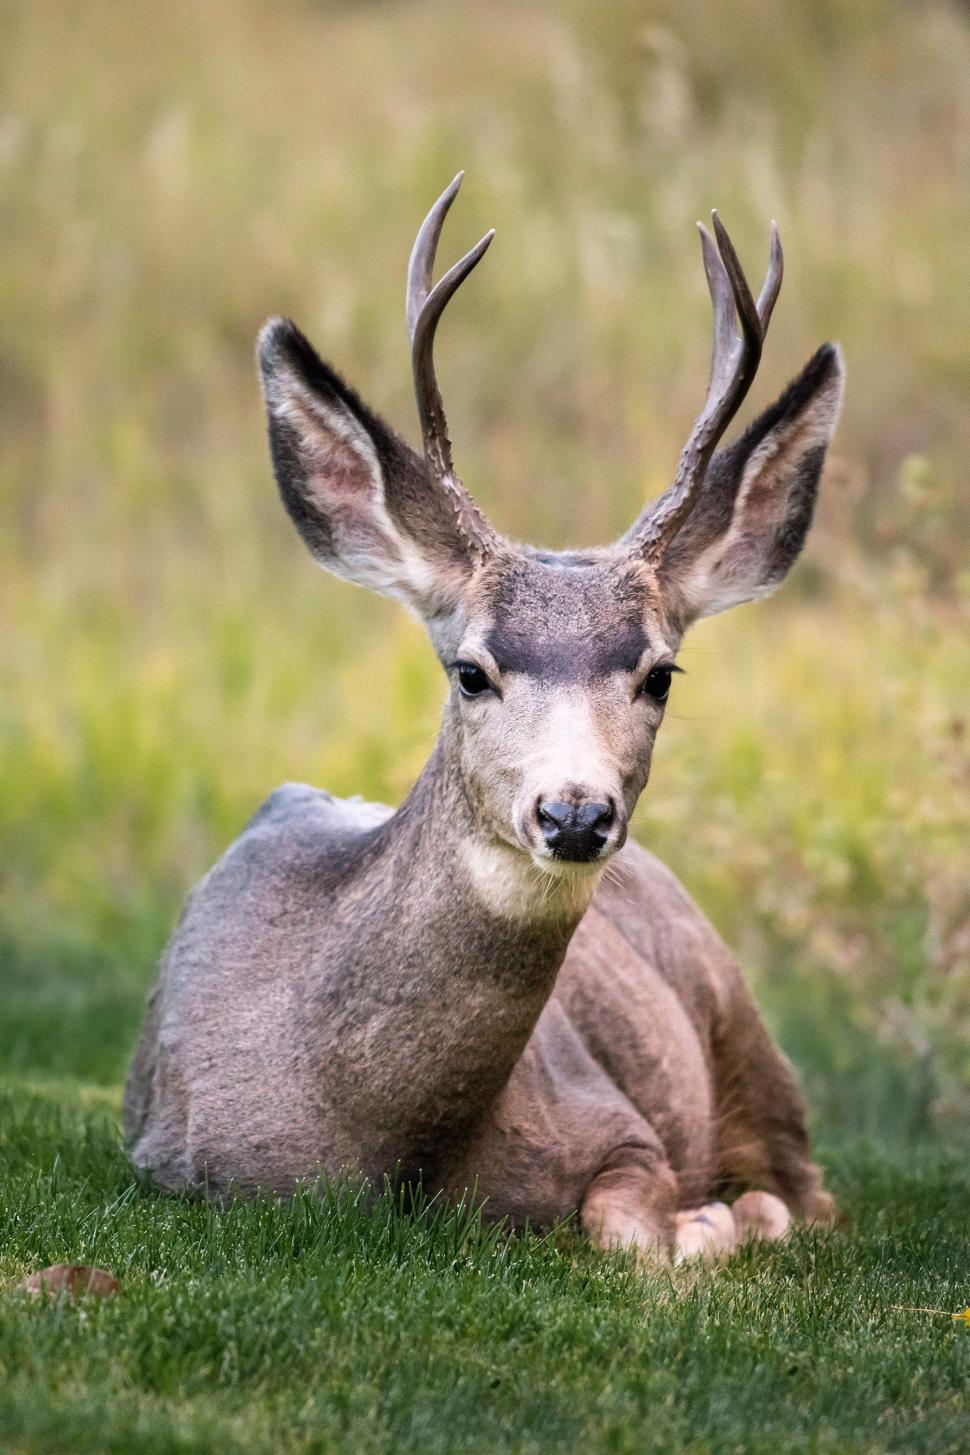 Free Image of Deer Resting in Grass Field 